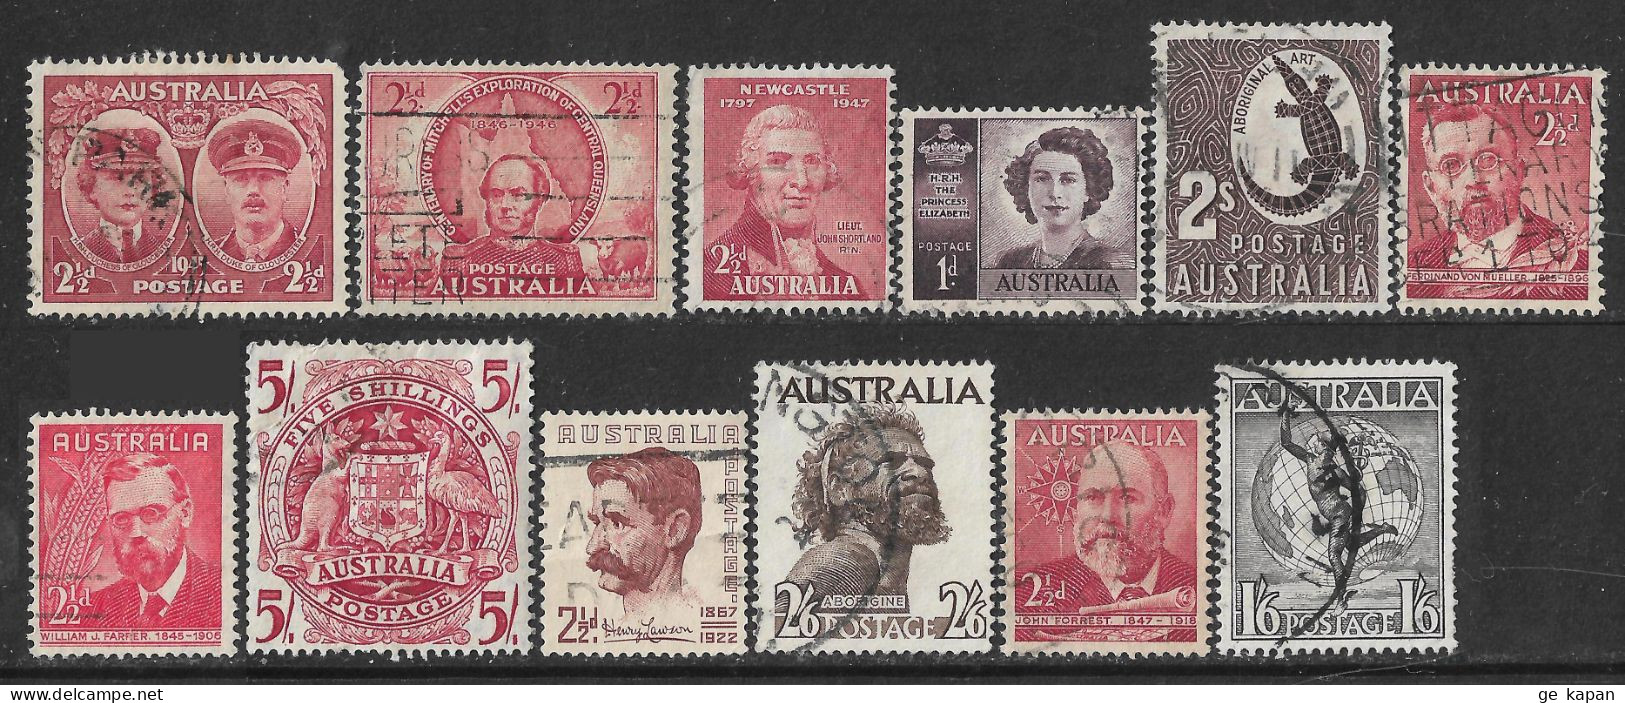 1945-1949 AUSTRALIA SET OF 12 USED STAMPS (Scott # 197,203,207,210,212-214,218,222,226,227,C6) - Used Stamps